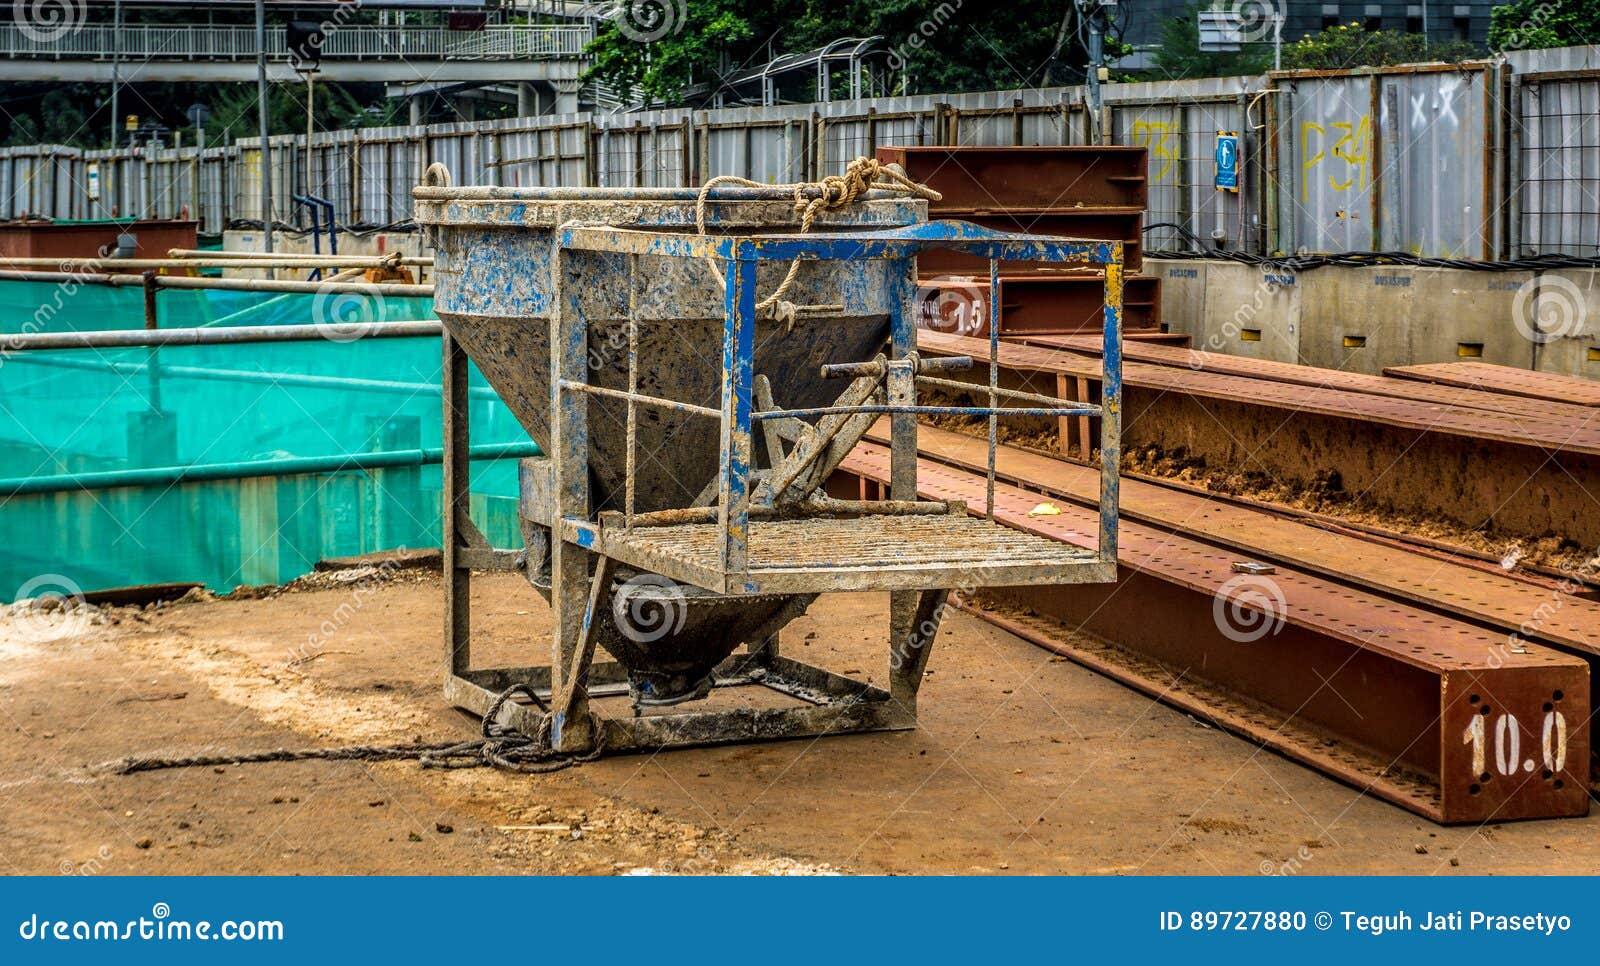 Unused Cement Mixer in Construction Site Photo Taken in Jakarta